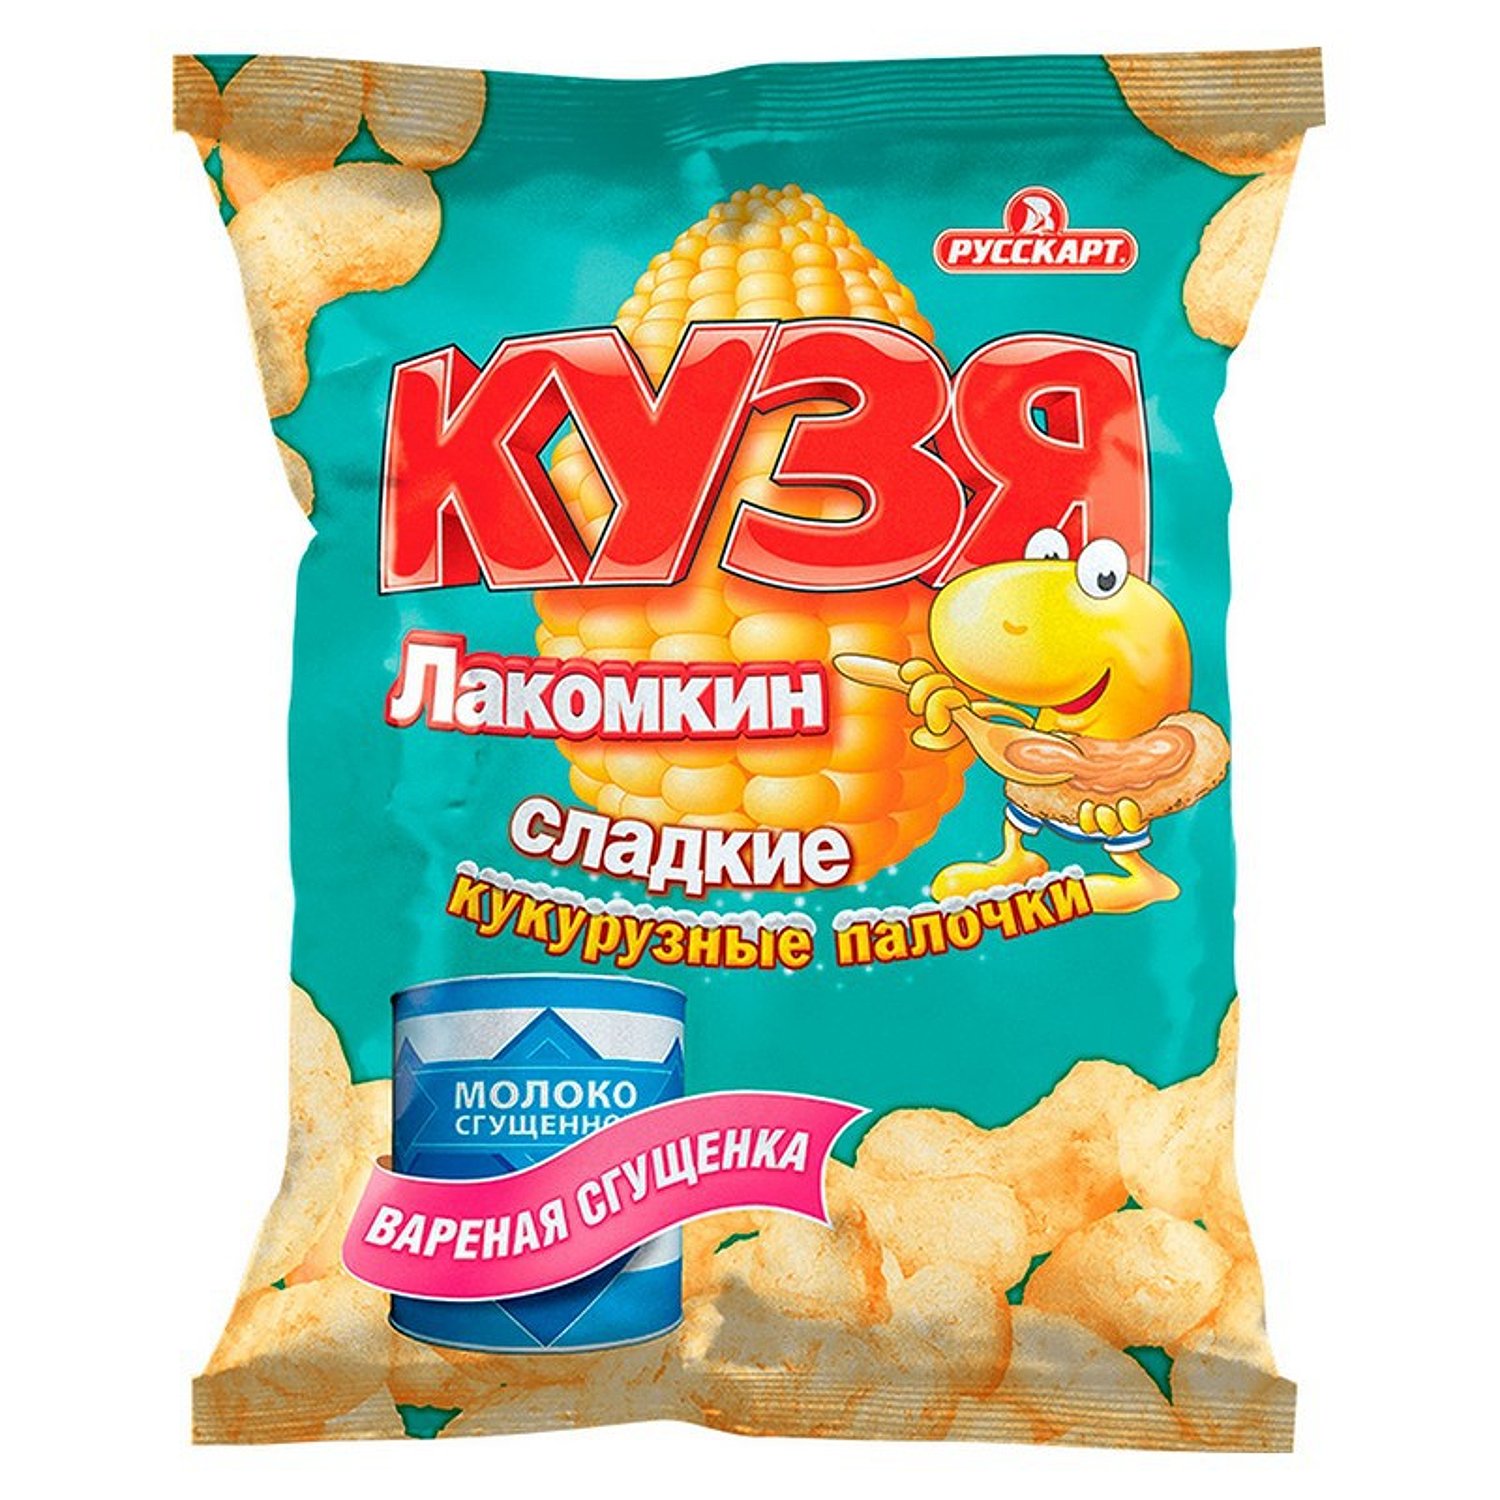  Кузя Лакомкин кукурузные с сахарной пудрой вареной сгущенкой .